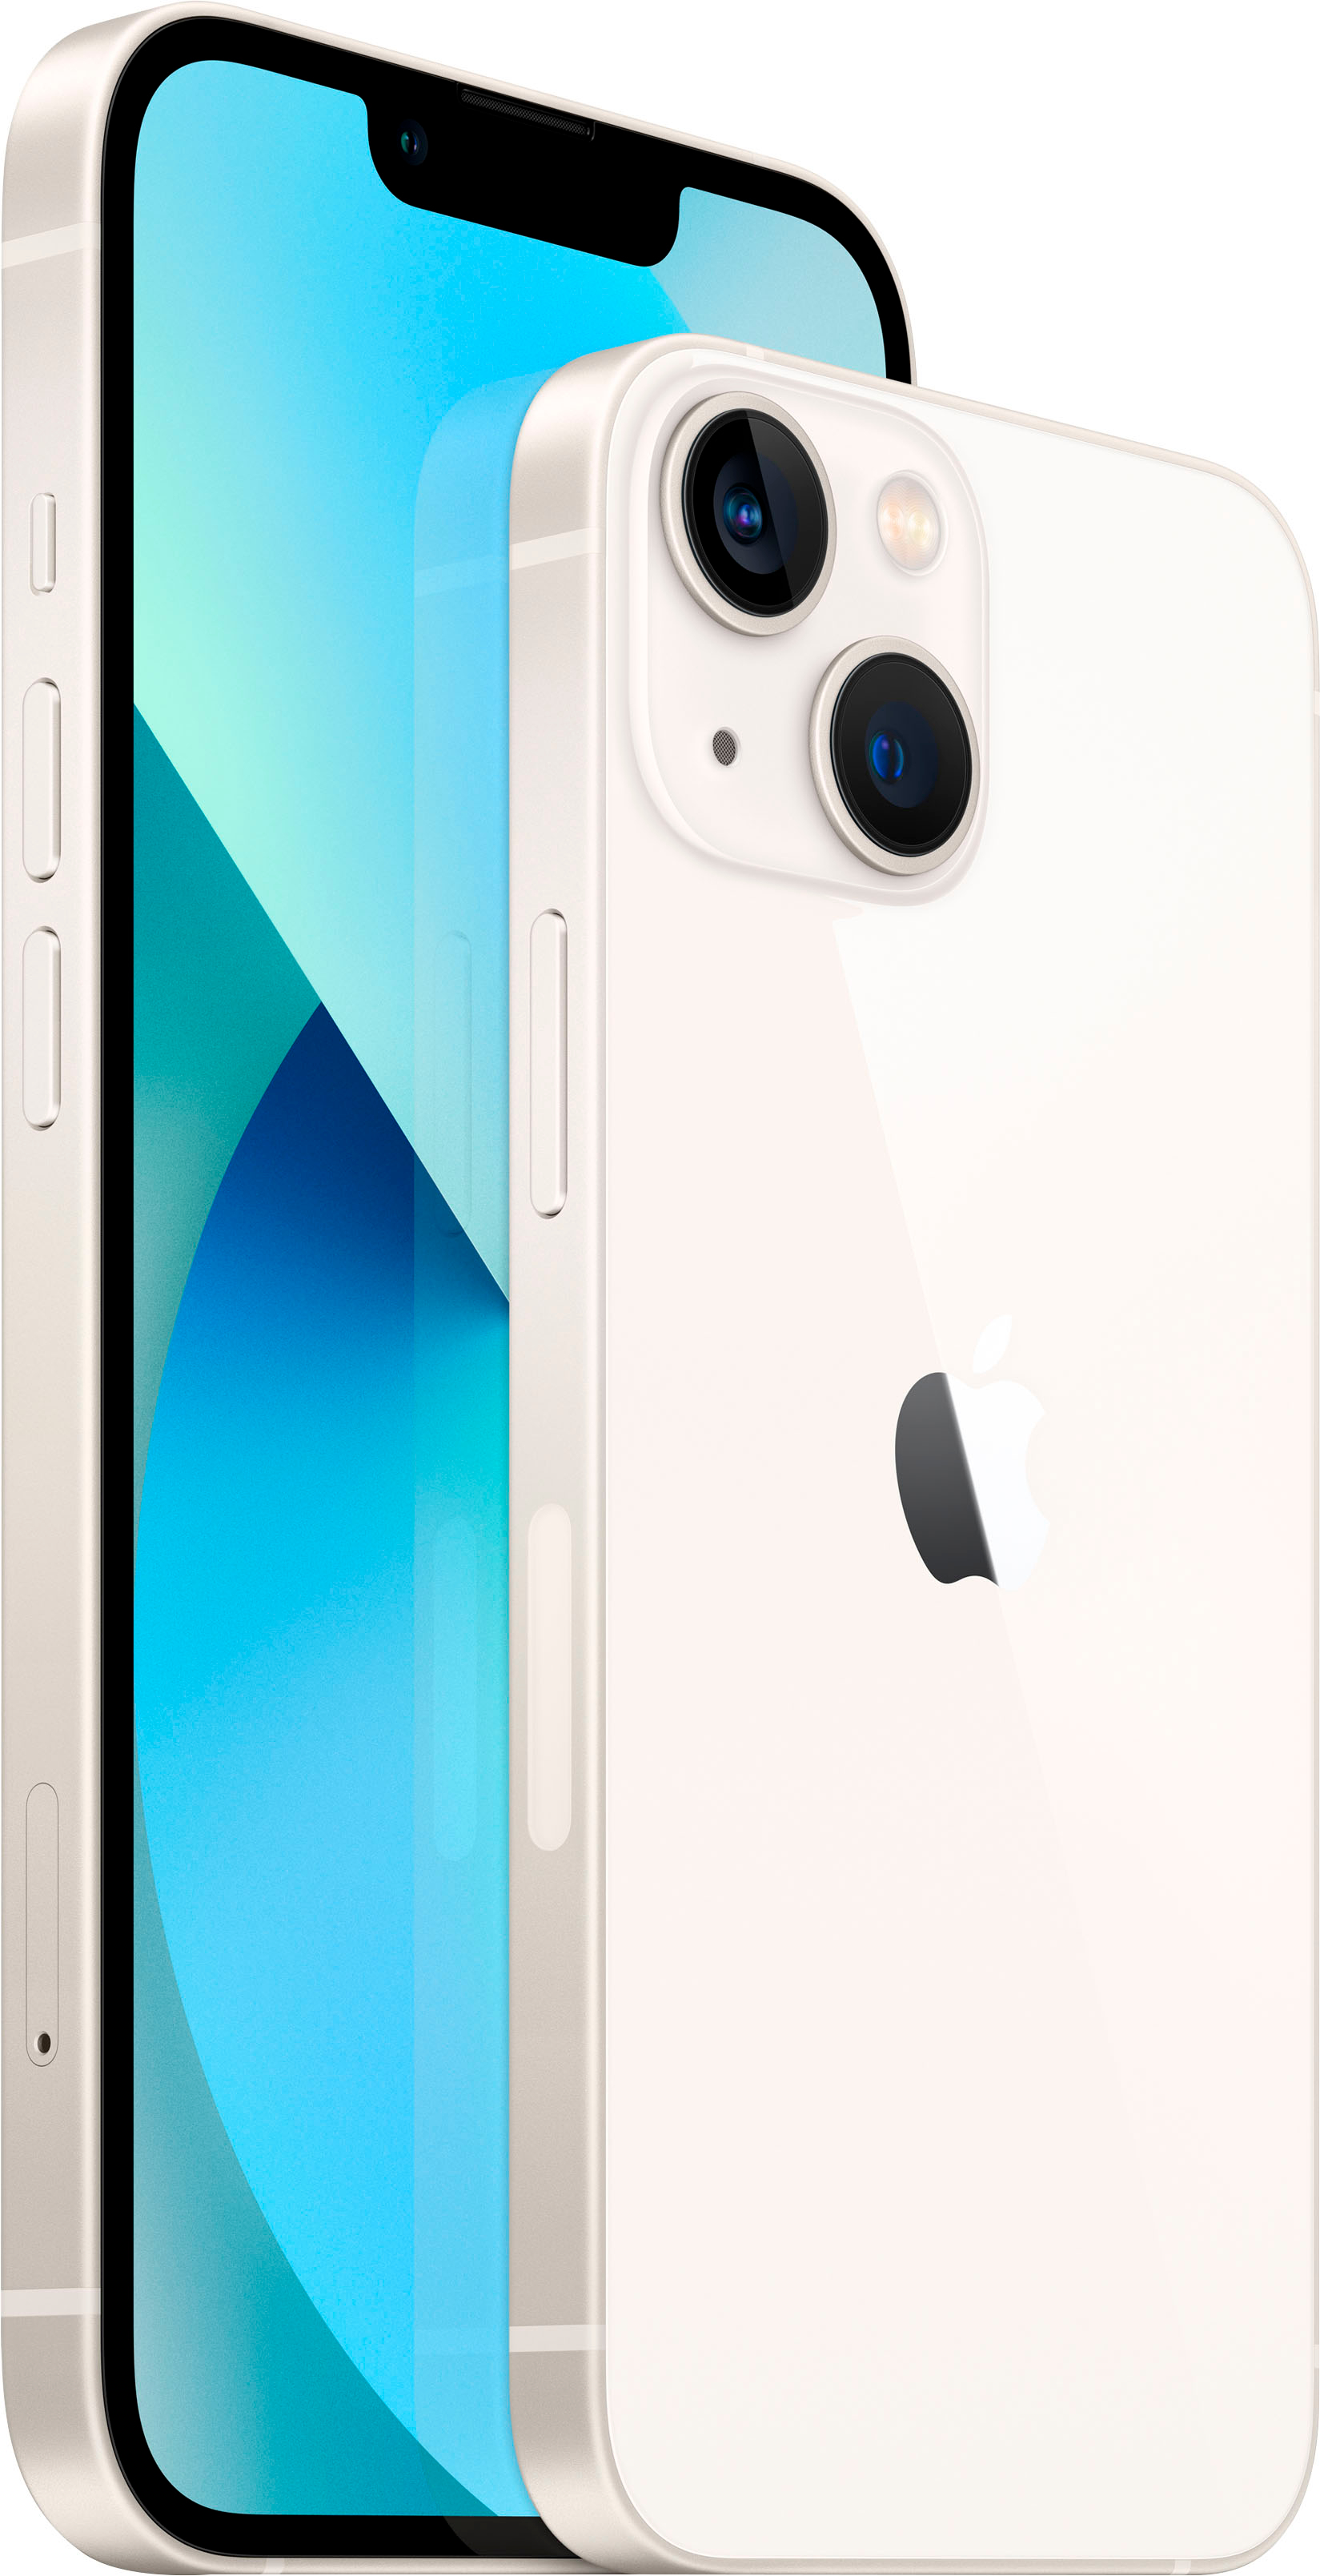 Starlight 13 5G - Apple Buy MMM73LL/A Best (Unlocked) 128GB iPhone